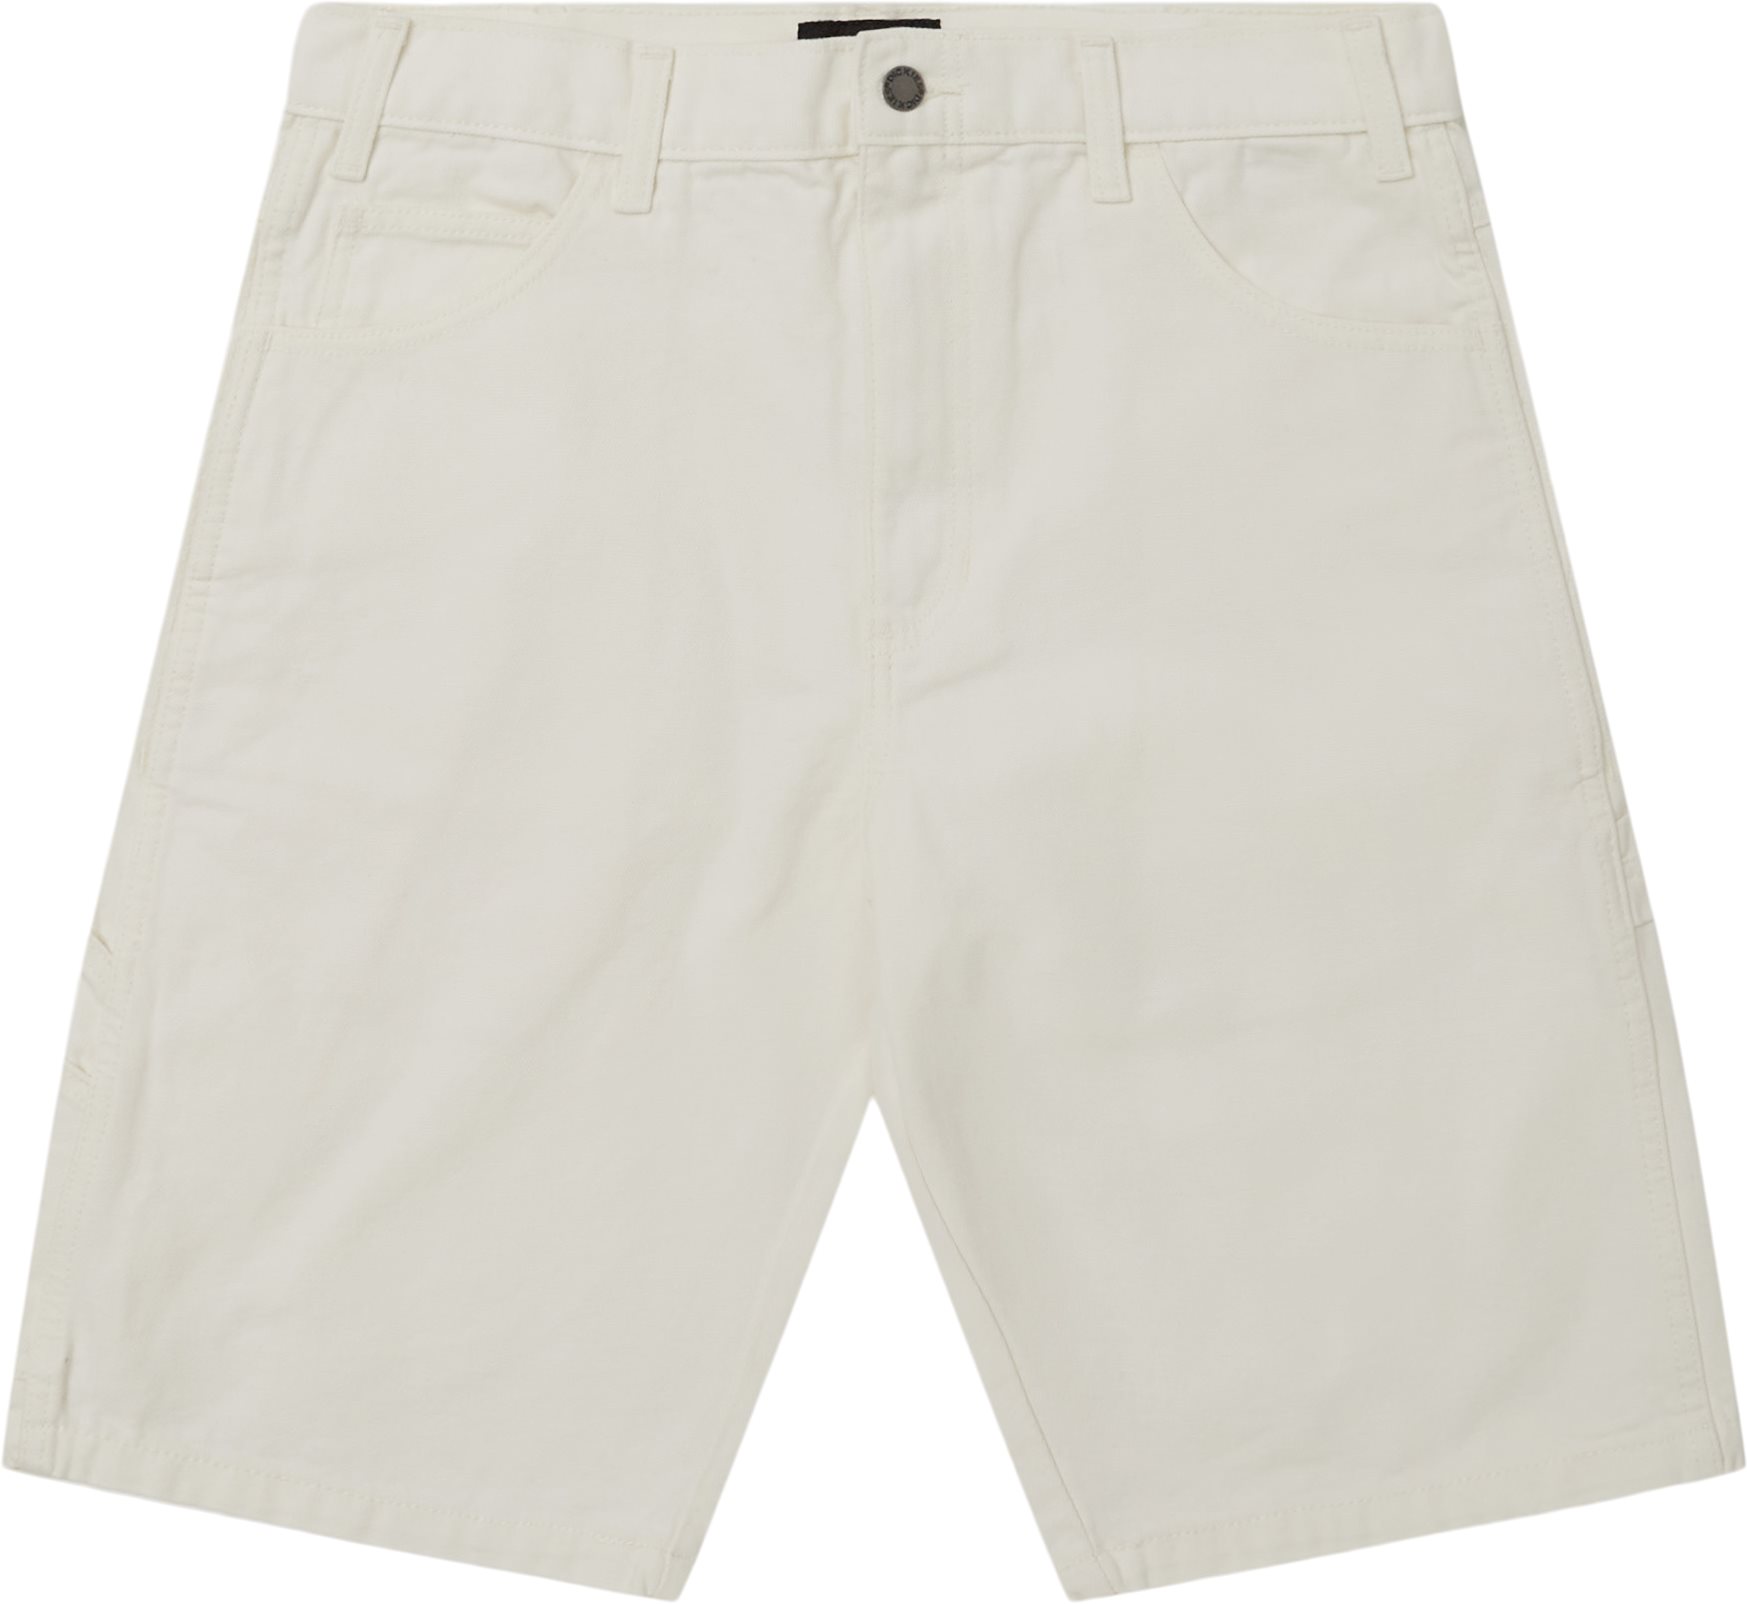 Duck Canvas Shorts - Shorts - Regular fit - White